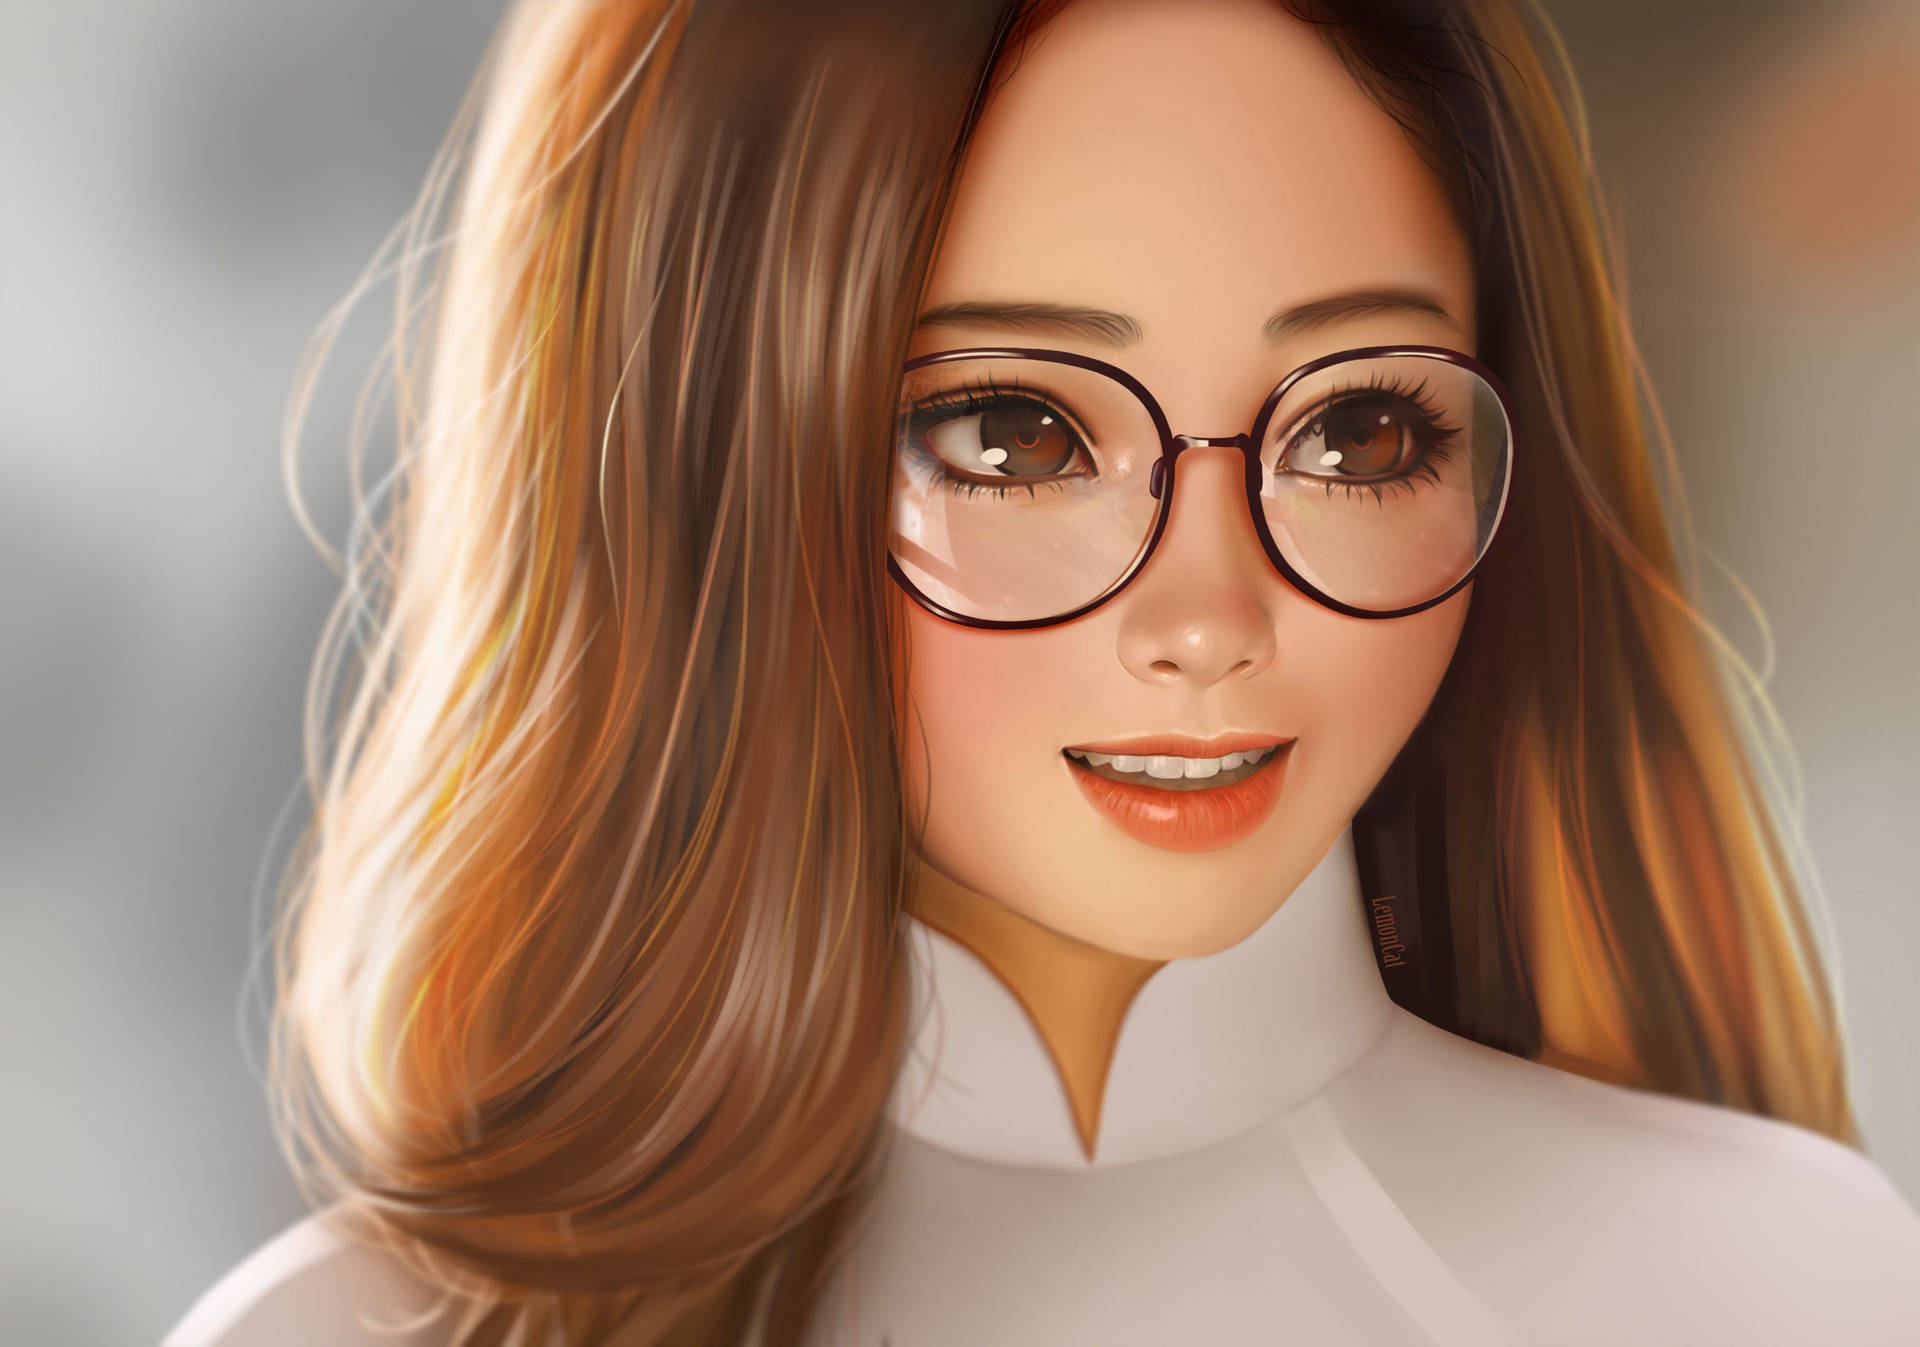 Cute Girl With Glasses Artwork Wallpaper